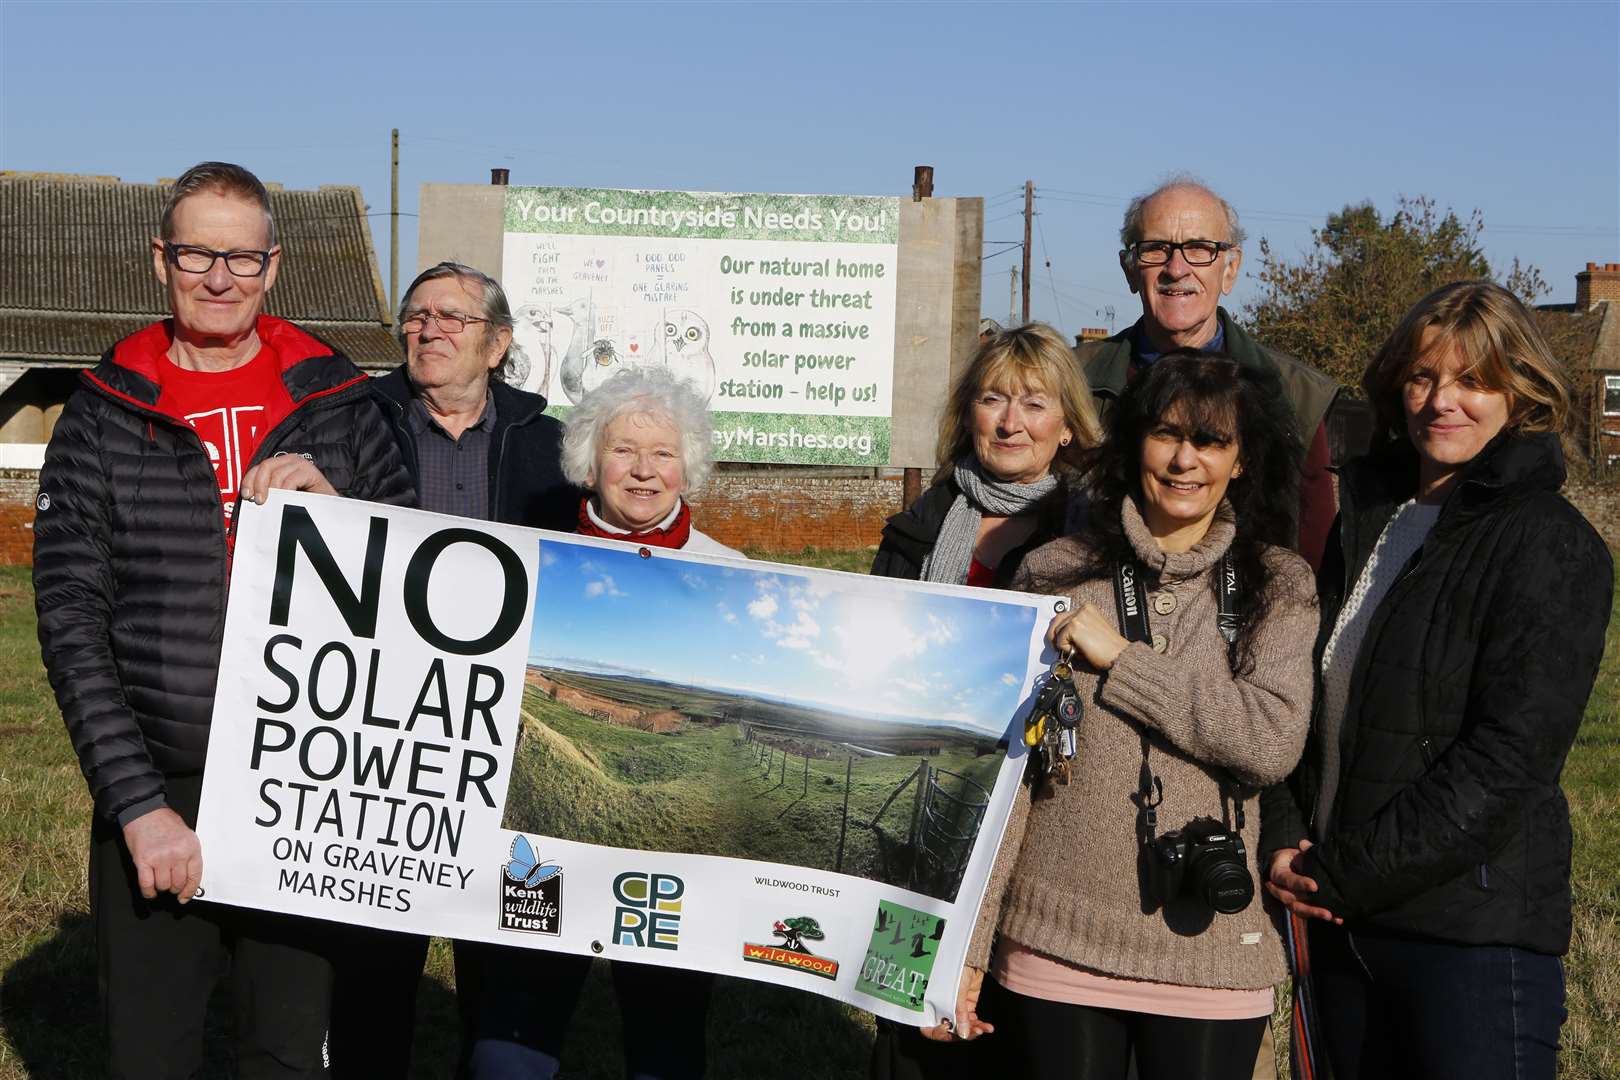 The Graveney Rural Environment Action team has long campaigned against the scheme